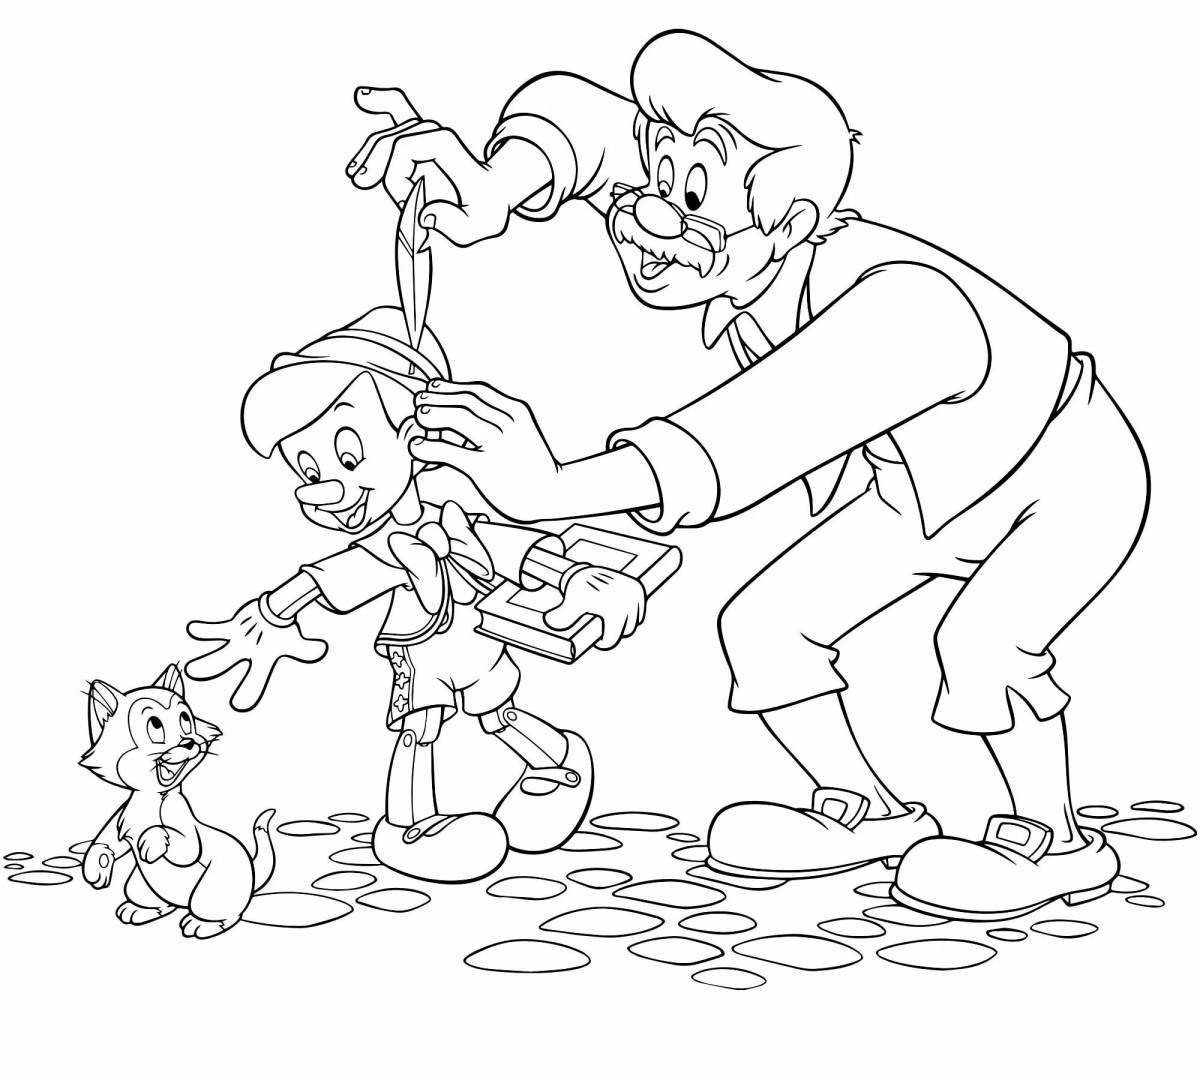 Pinocchio fun coloring book for kids